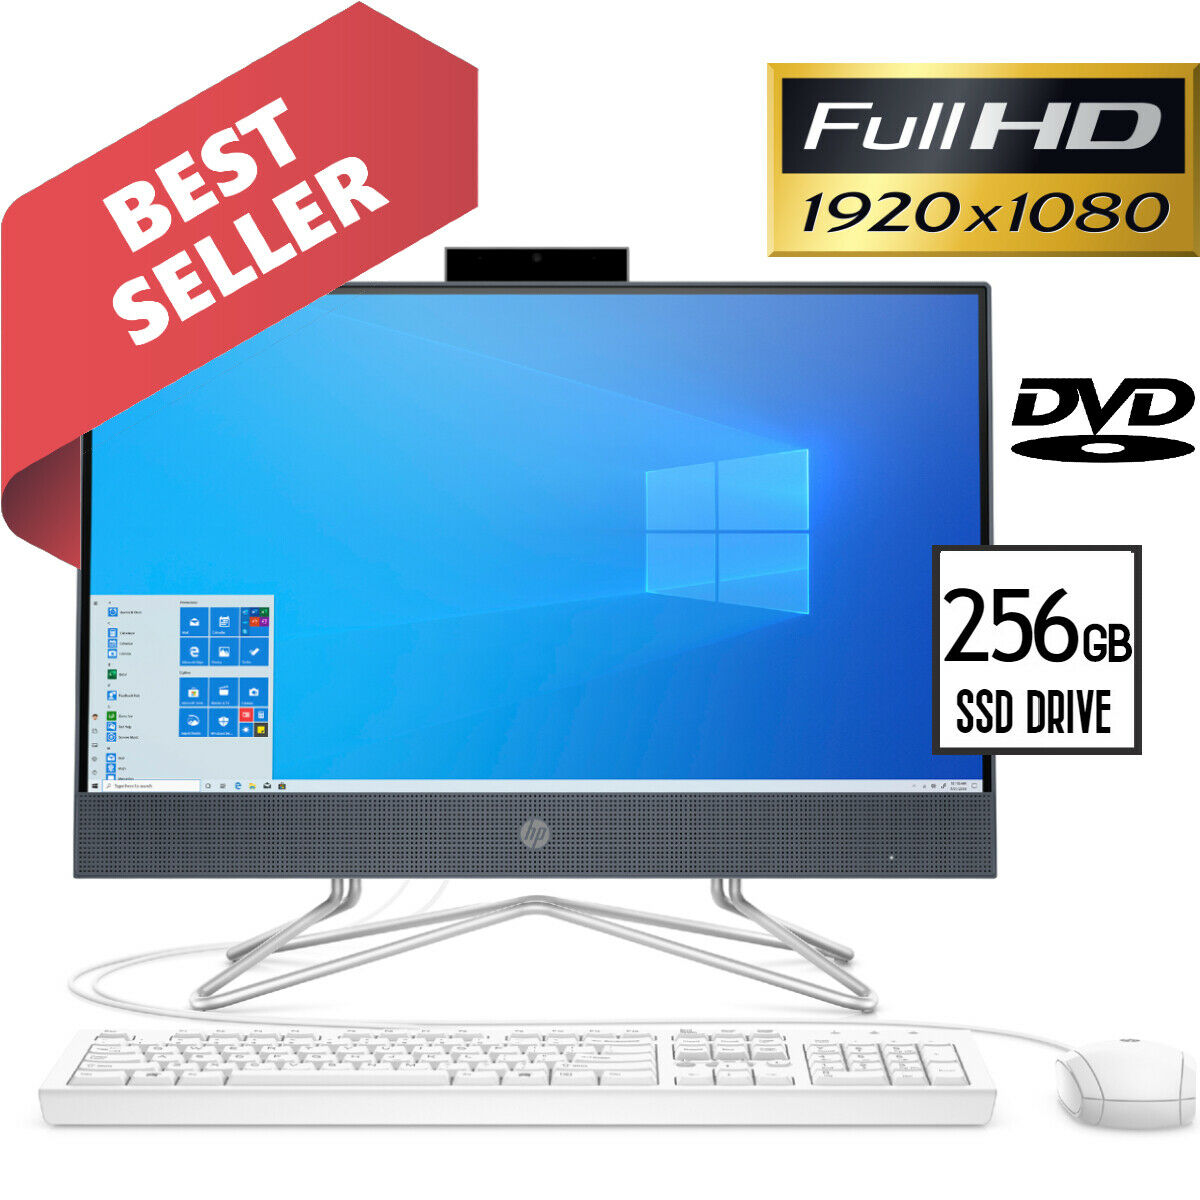 Hp All-in-one Computer 22” Full-hd Display Intel 3.20ghz 4gb 256gb Ssd Drive Bt